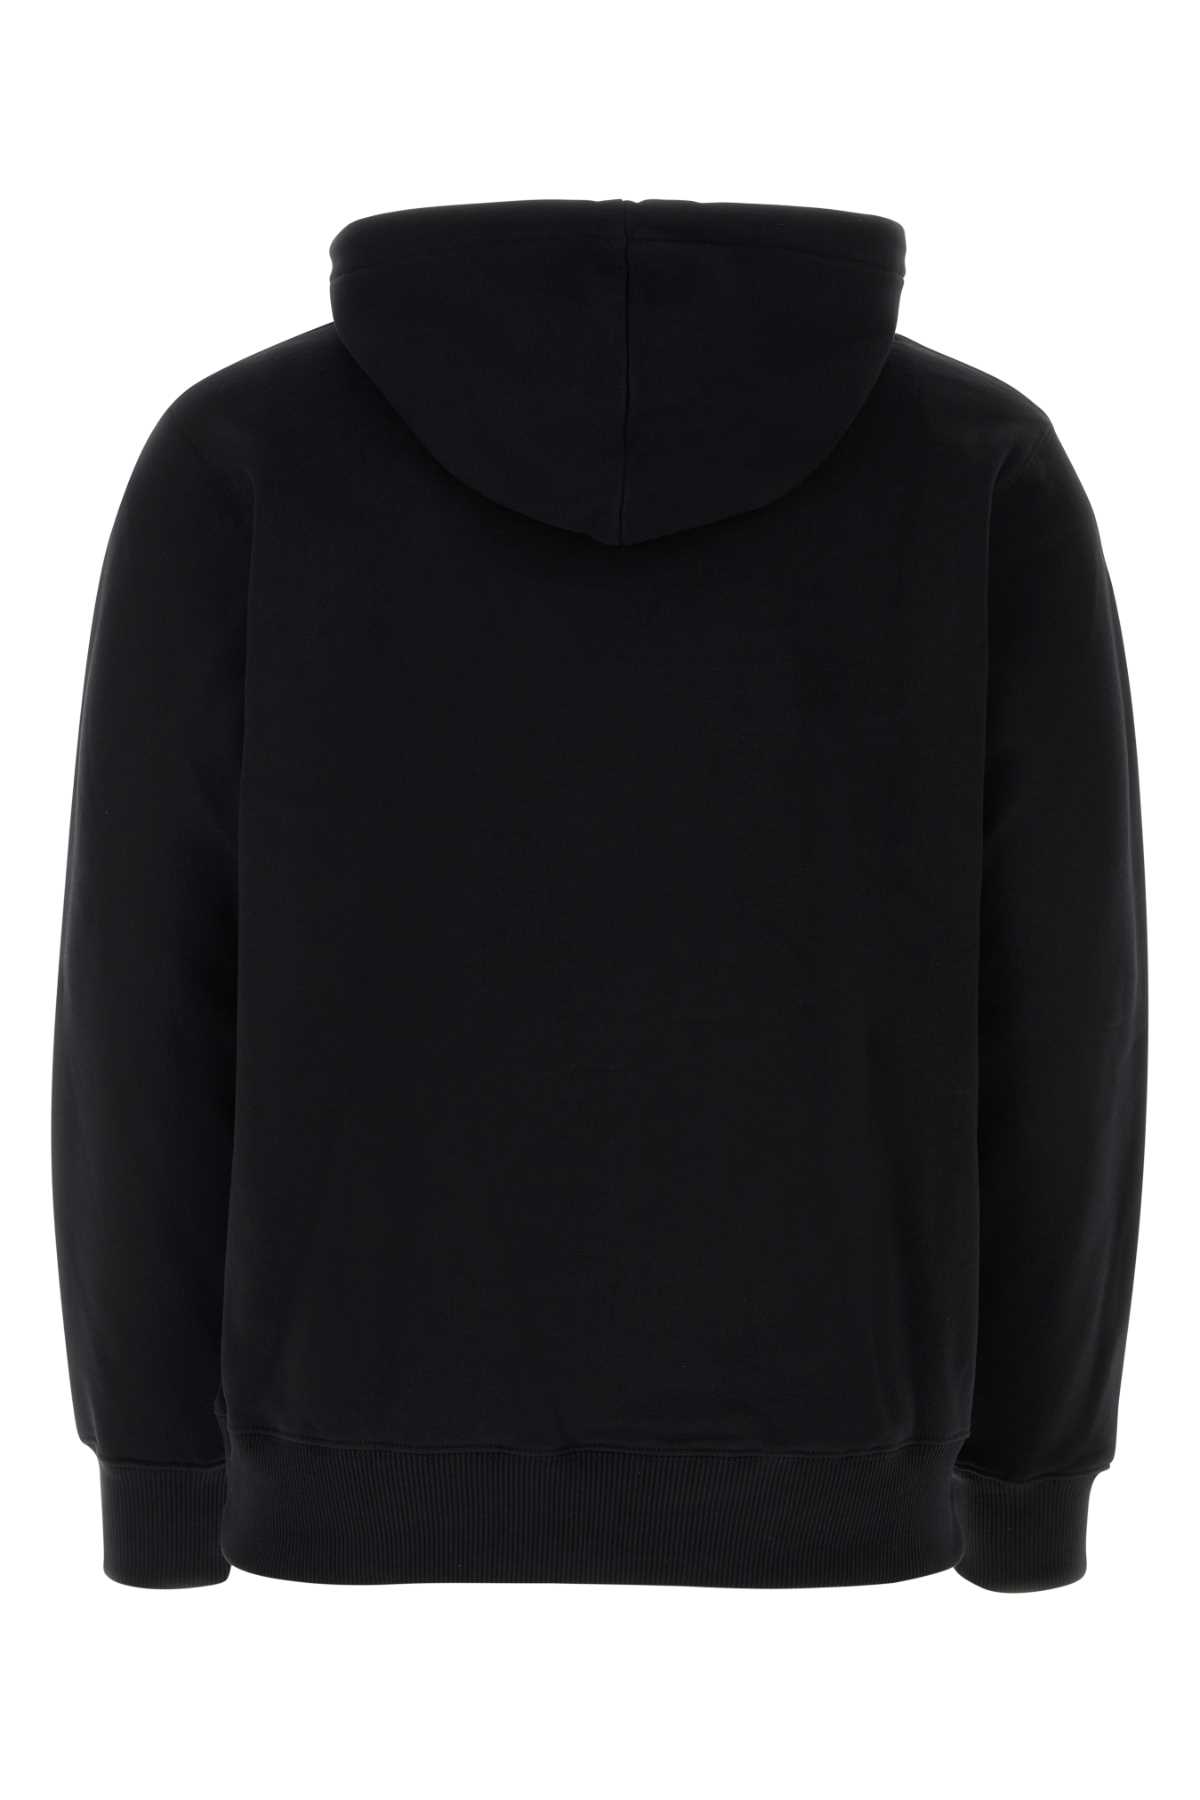 Shop Etudes Studio Black Cotton Sweatshirt